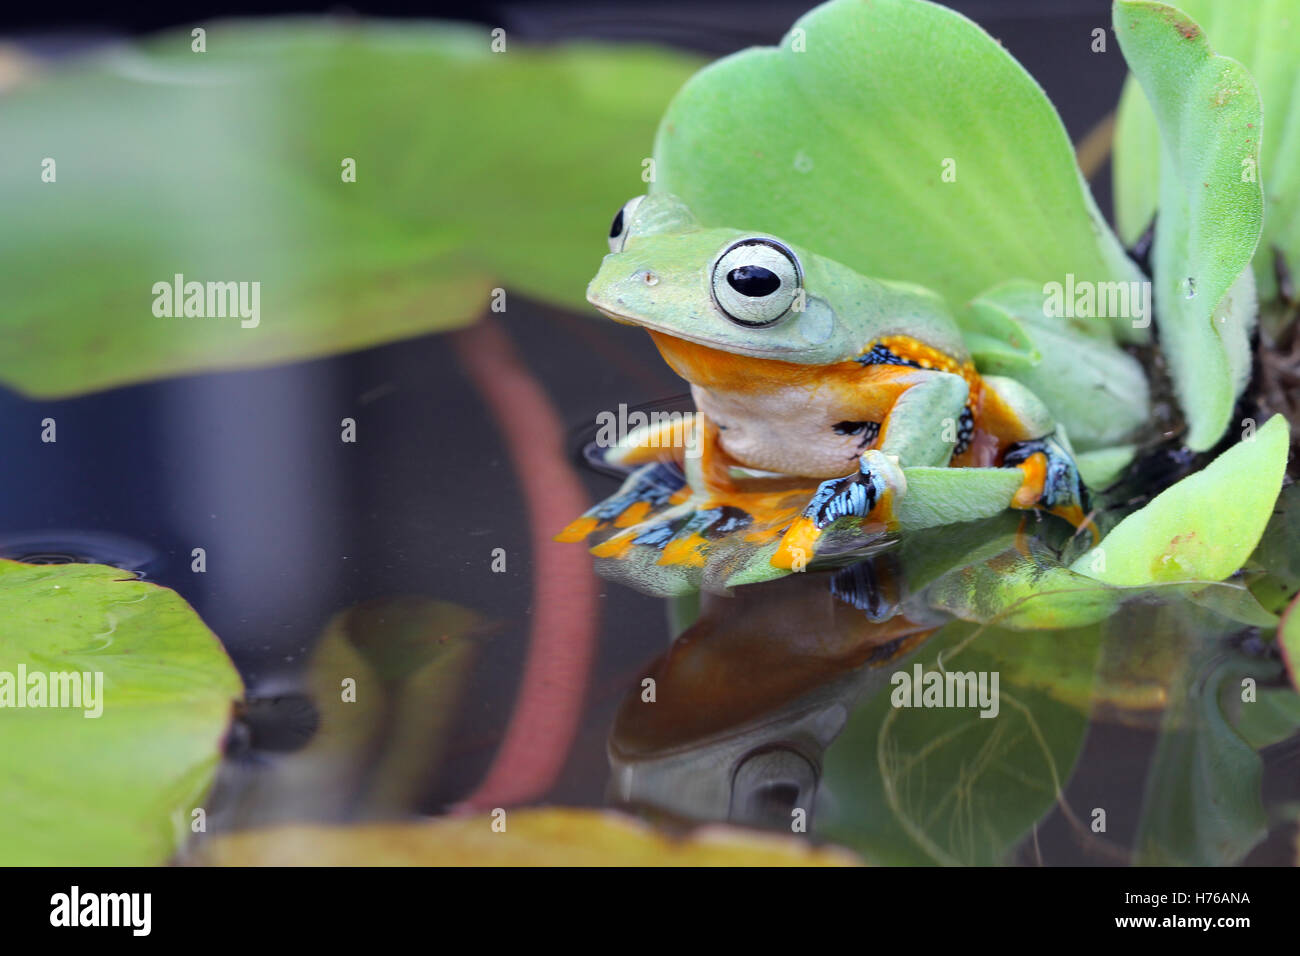 Javan Tree frog sitting on lily pad, Indonesia Stock Photo